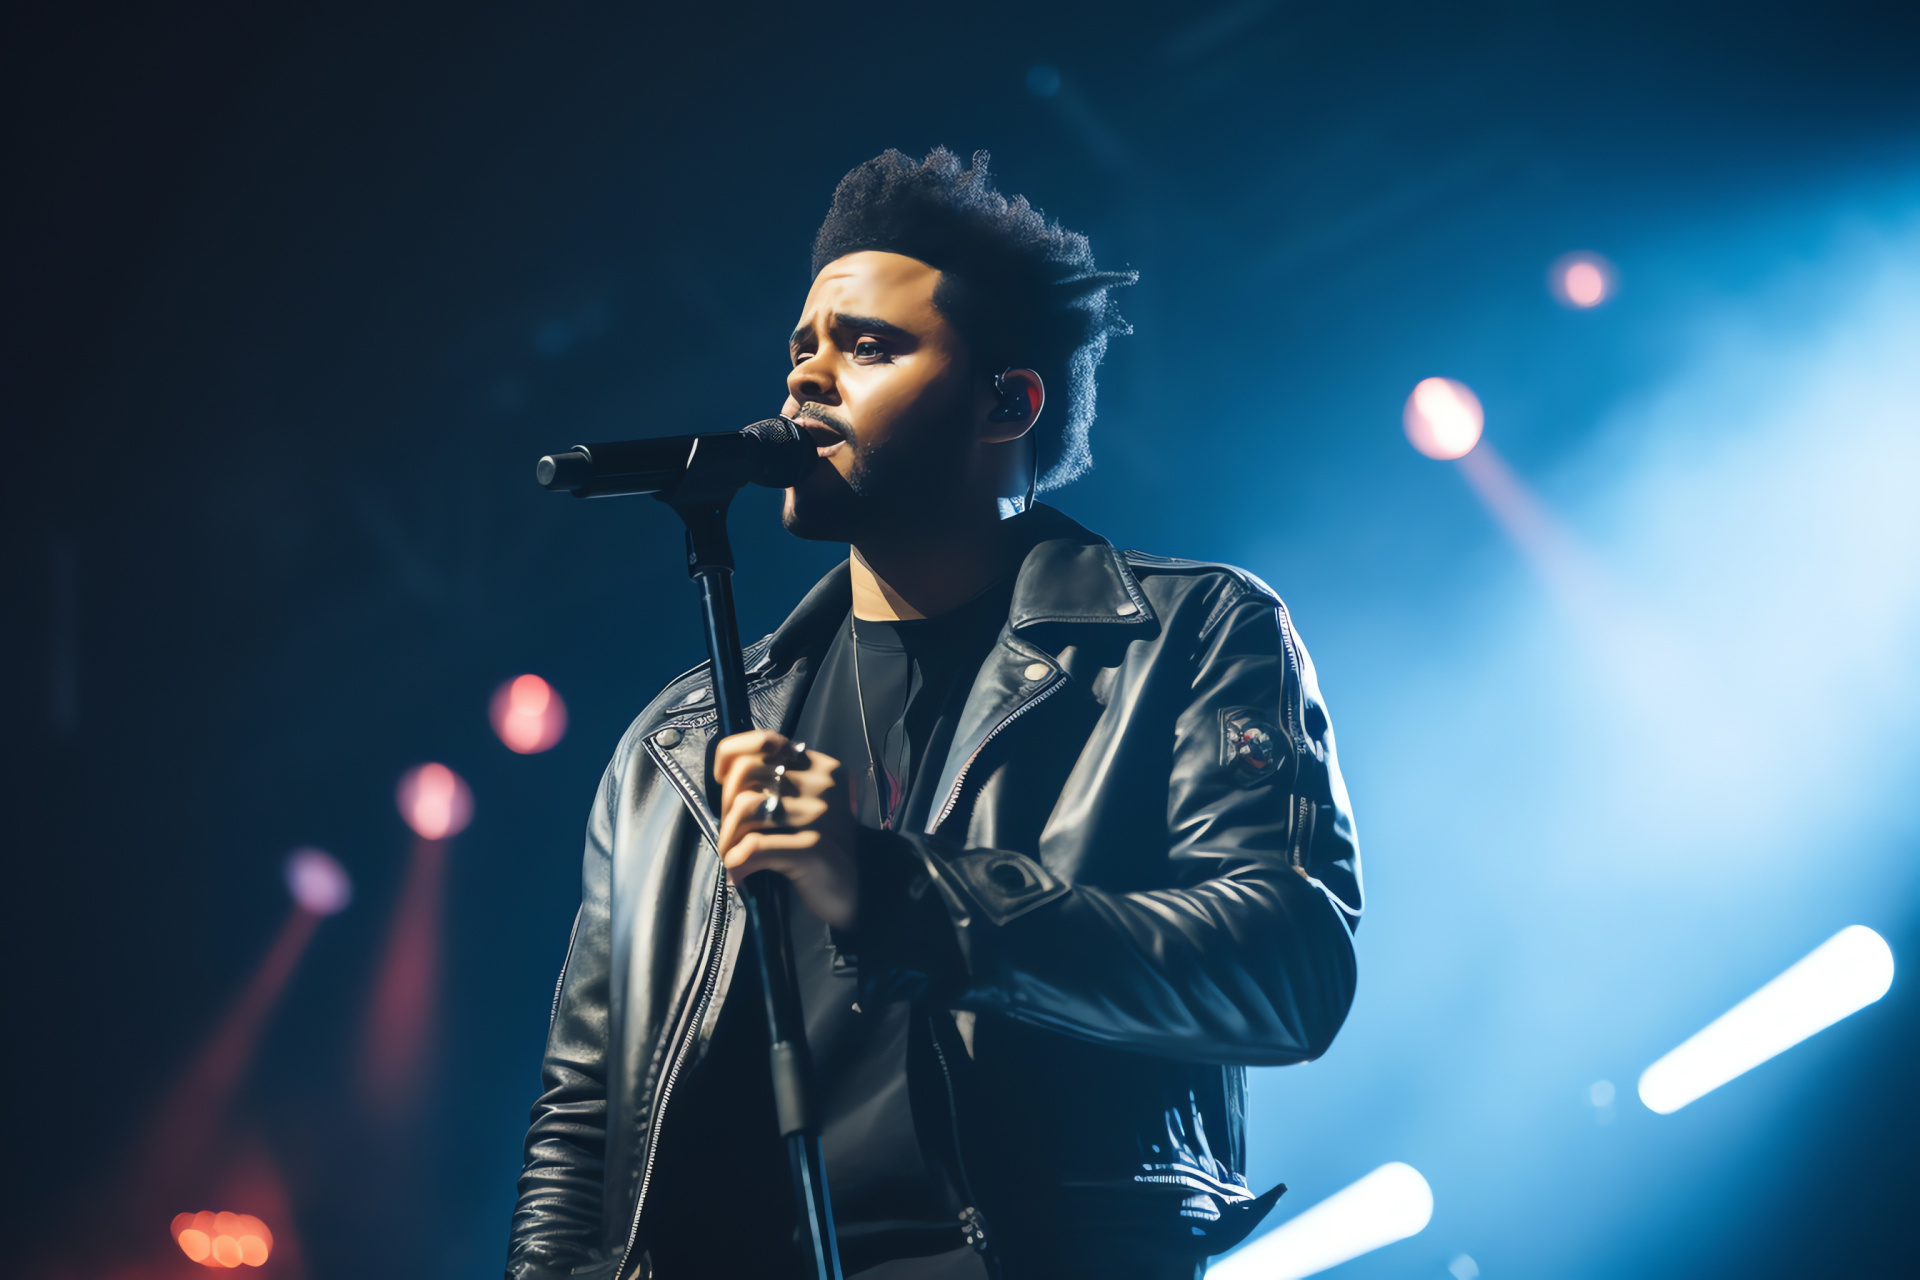 Live show The Weeknd, Musician's gear, Denim apparel, Performer's microphone, Concert venue, HD Desktop Image